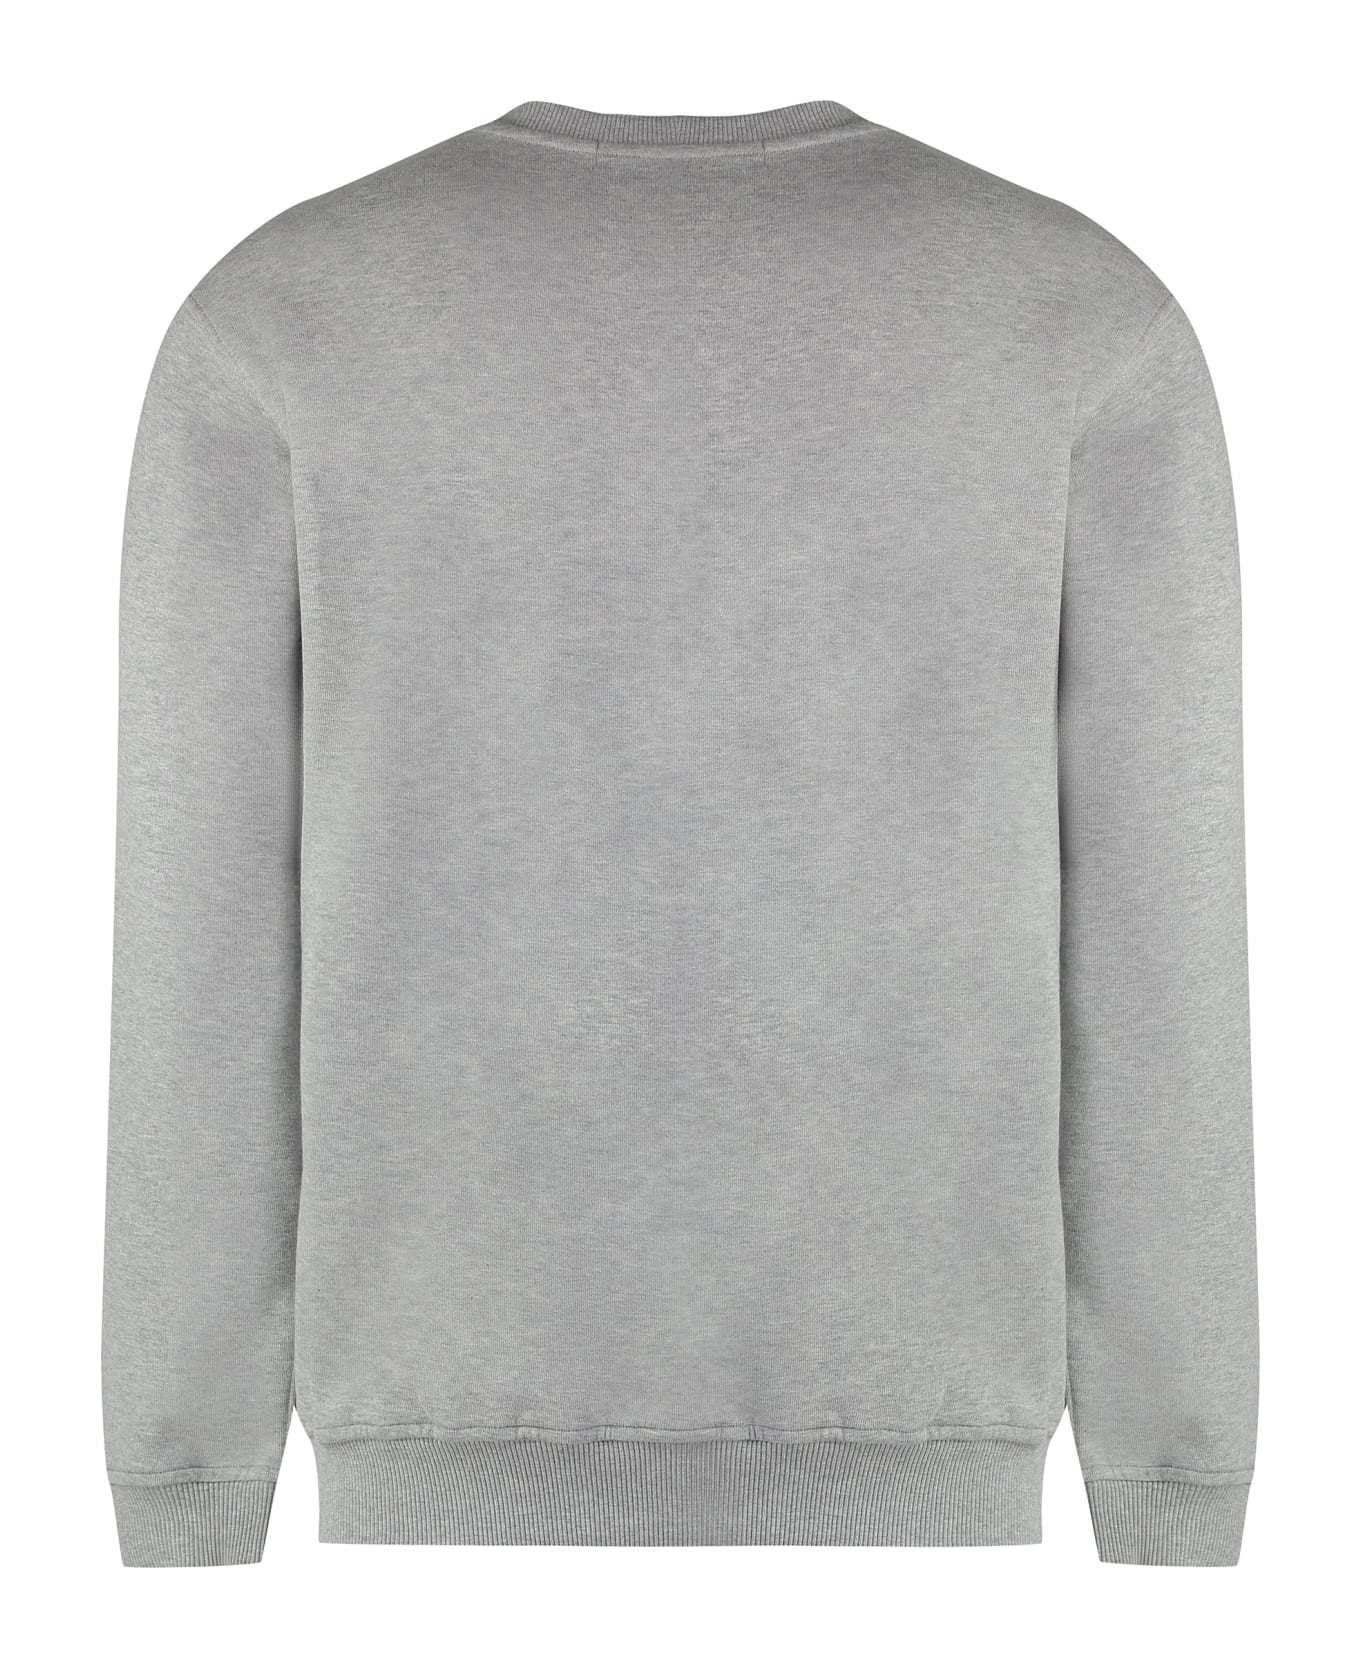 Comme des Garçons Shirt Andy Warhol Print Cotton Sweatshirt - grey